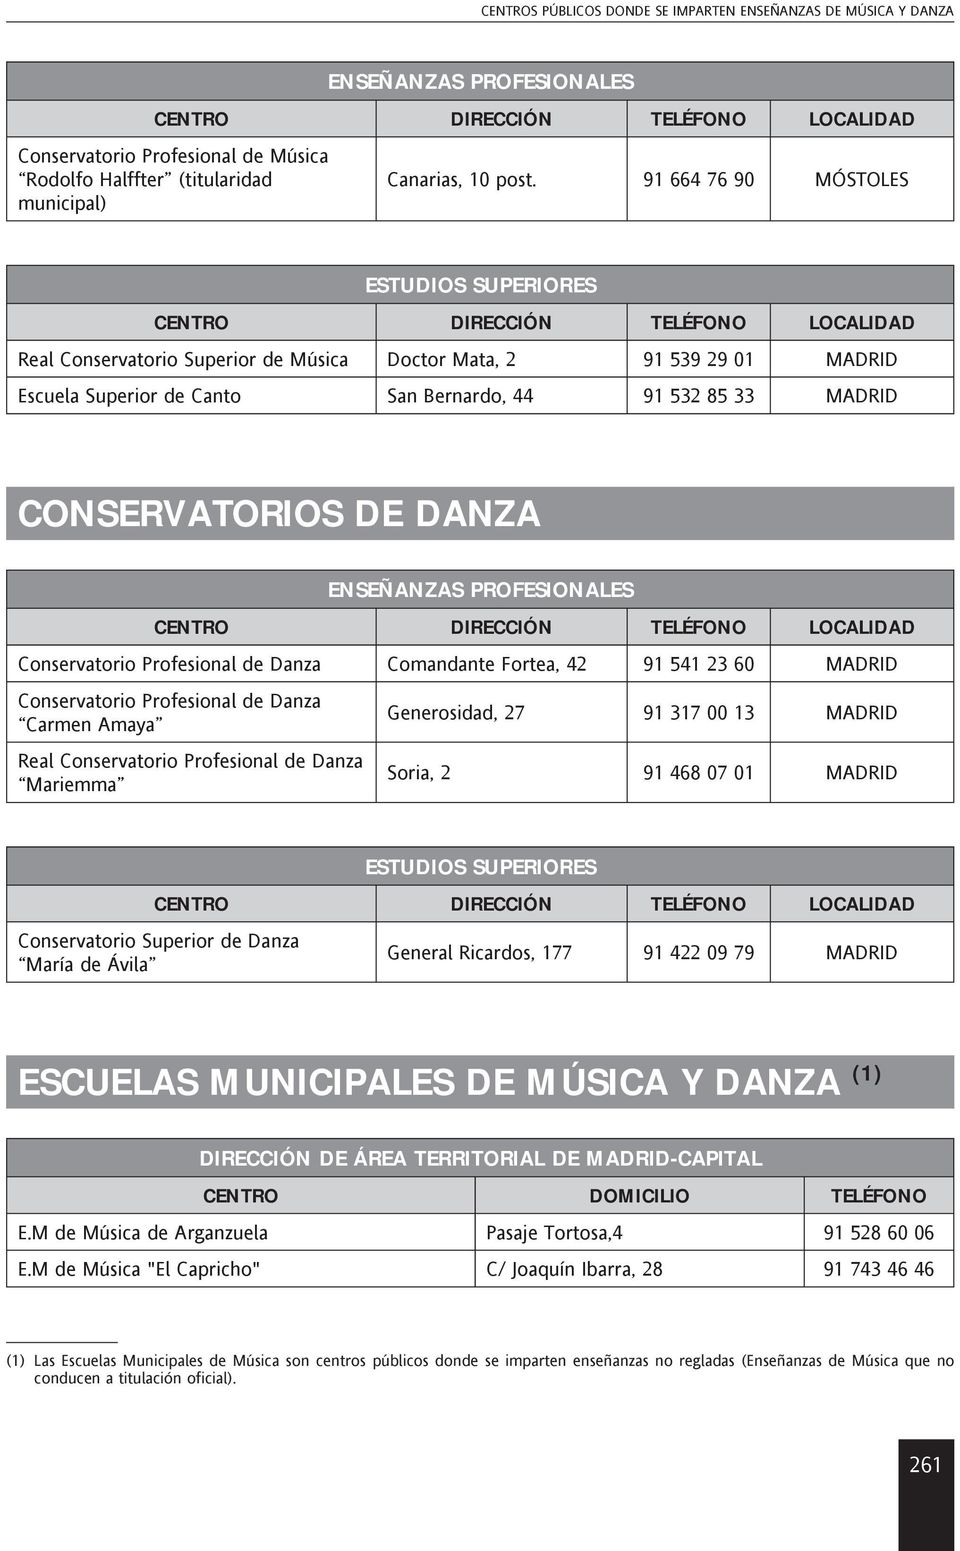 DANZA ENSEÑANZAS PROFESIONALES Conservatorio Profesional de Danza Comandante Fortea, 42 91 541 23 60 MADRID Conservatorio Profesional de Danza Carmen Amaya Real Conservatorio Profesional de Danza